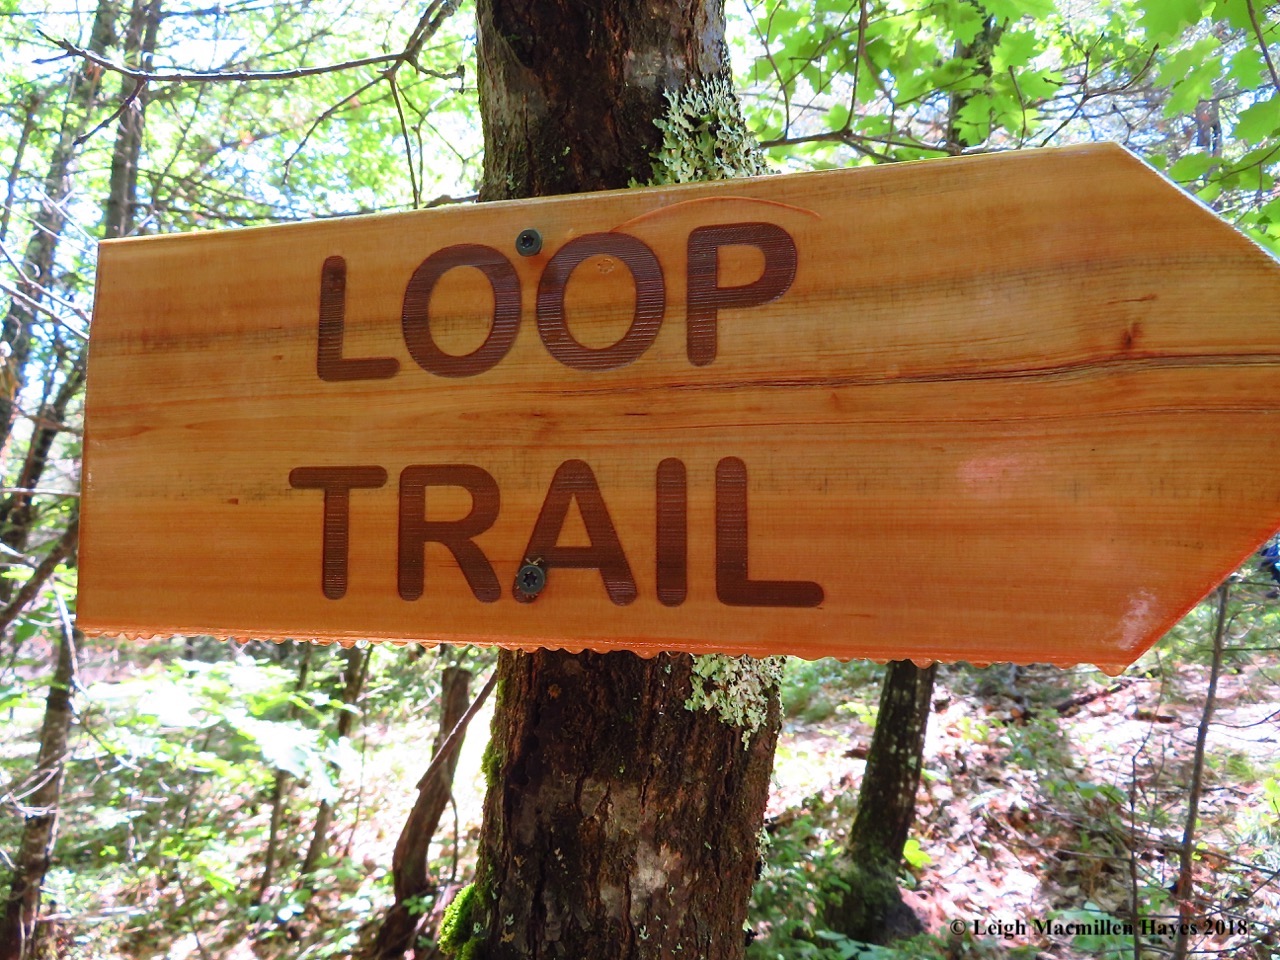 s15-loop trail sign at ridge